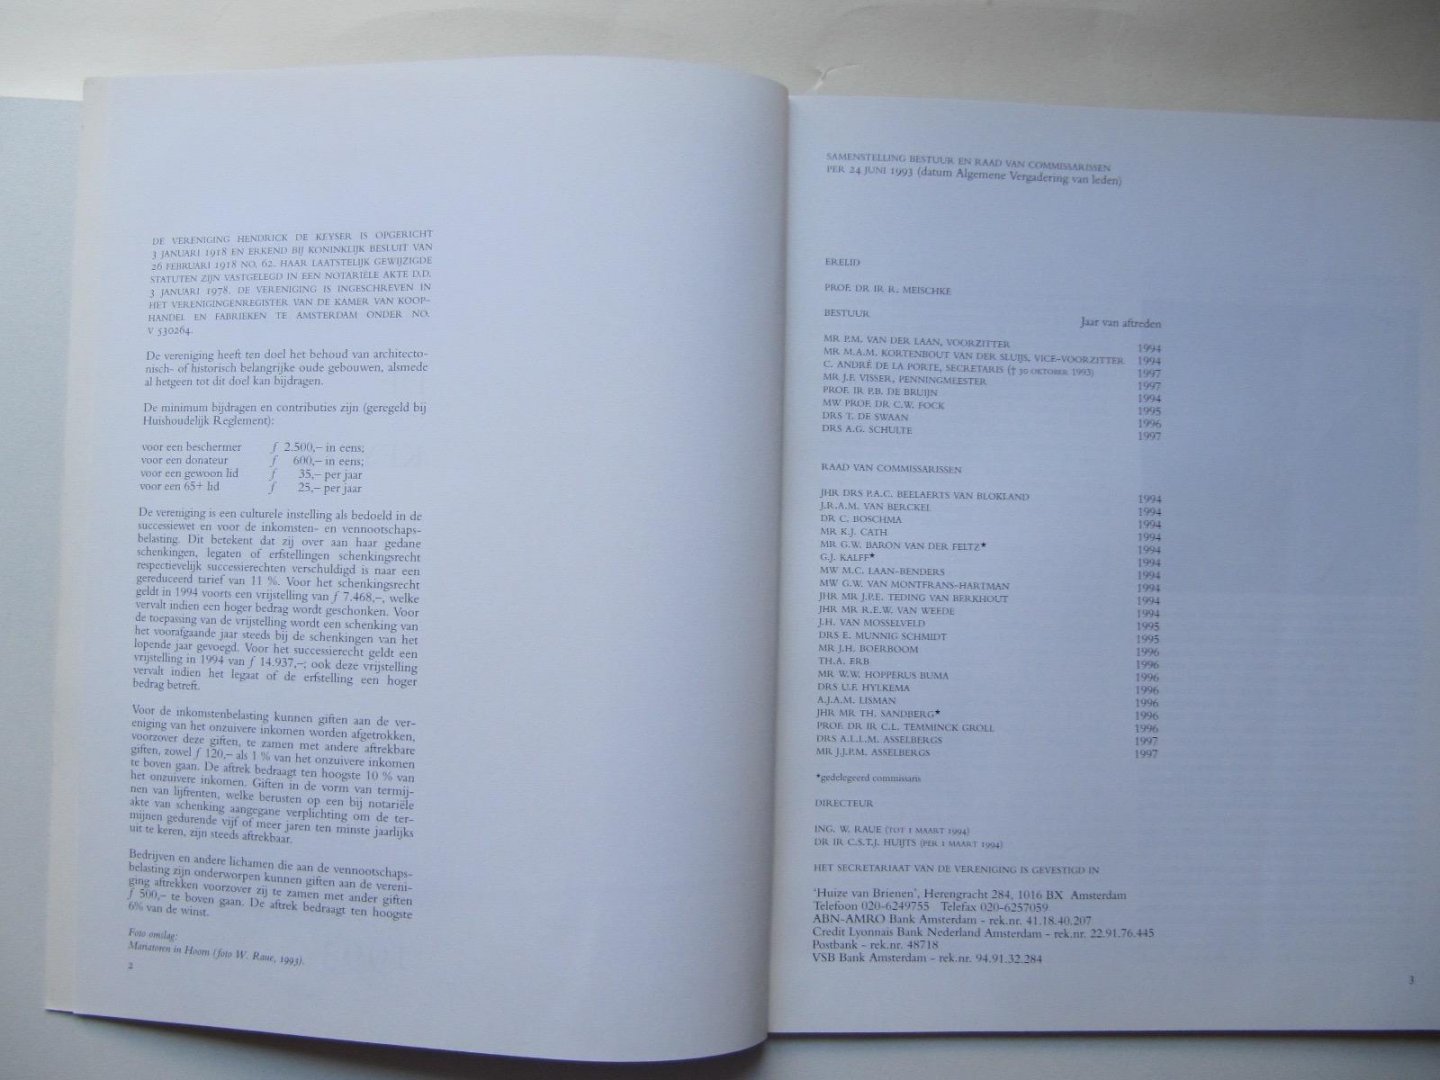  - Vereniging Hendrick de Keyser-75e jaarverslag 1993